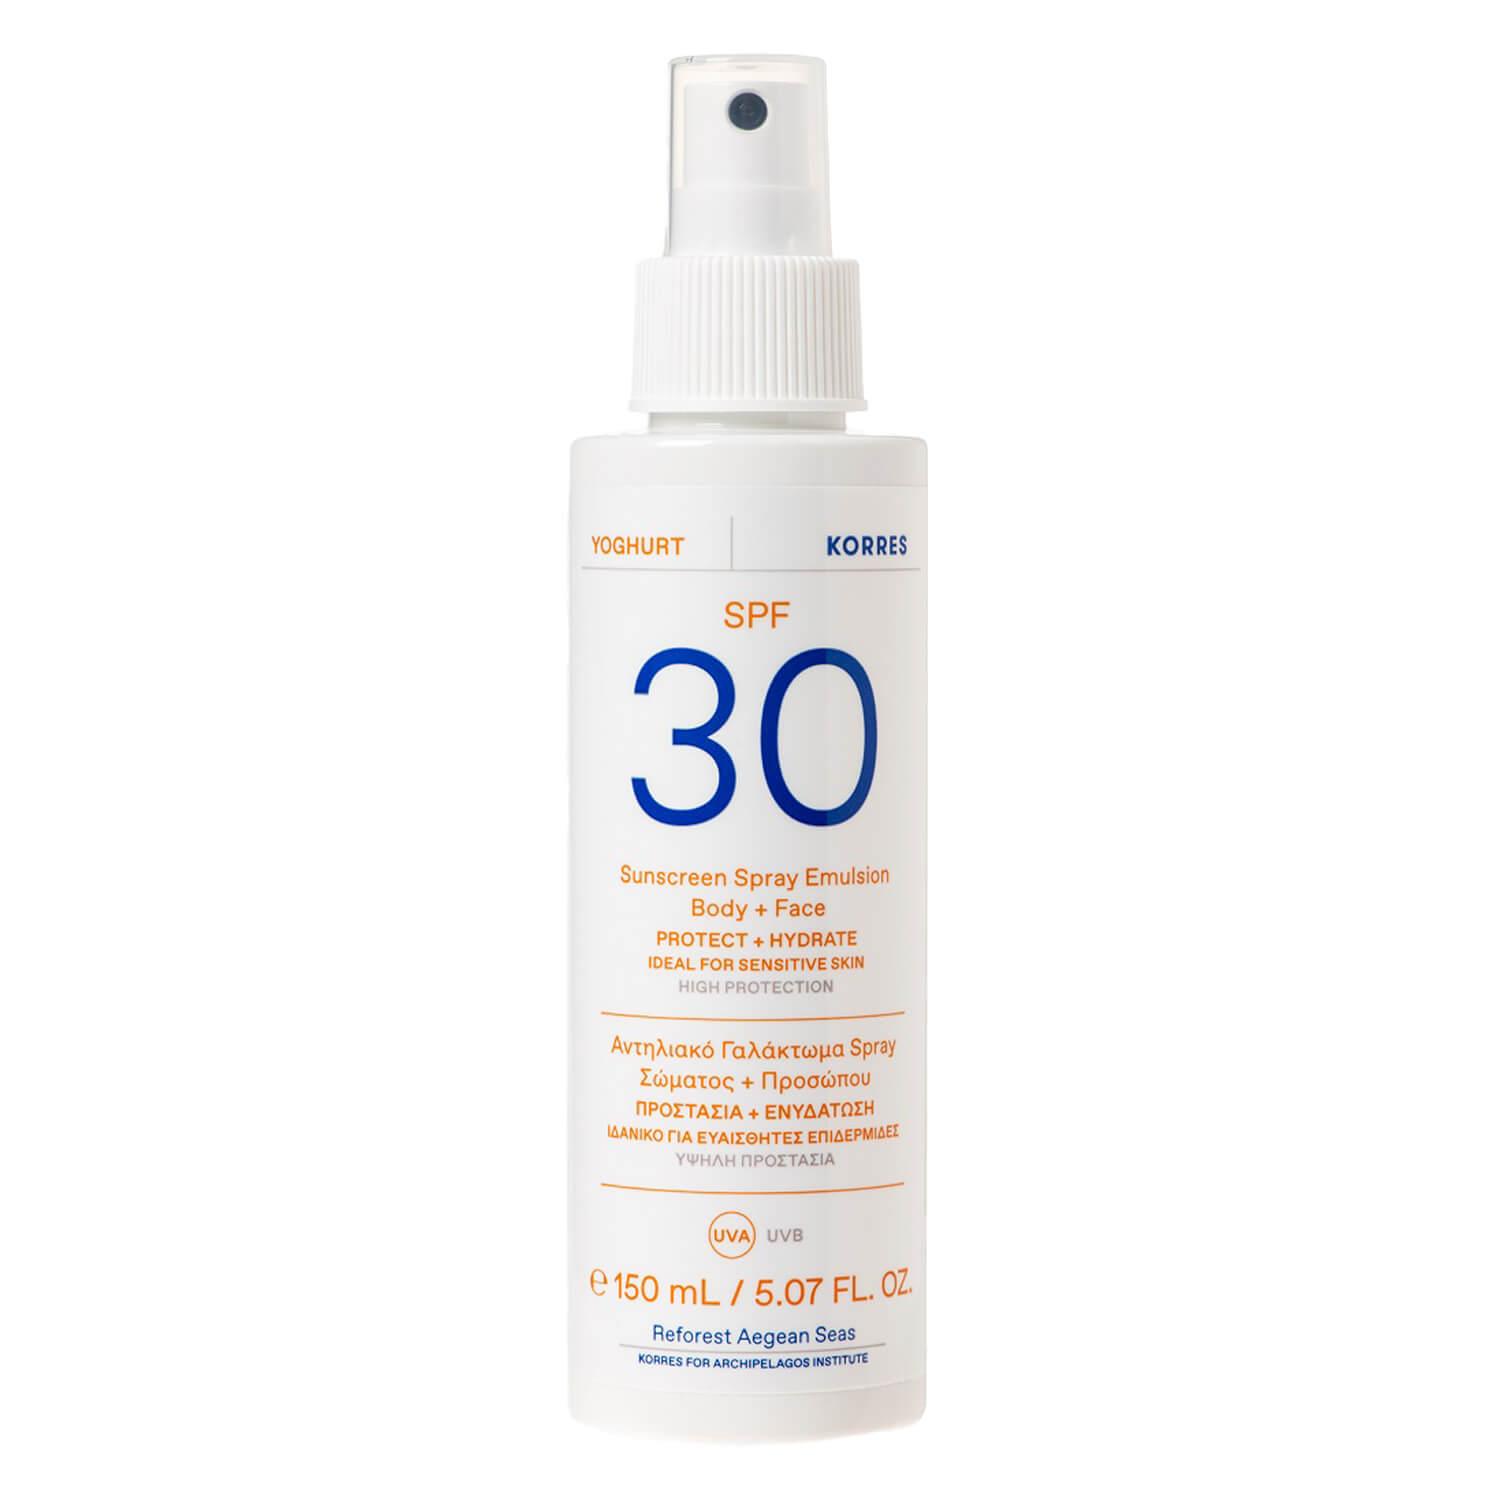 Korres Care - Yoghurt Sunscreen Spray Emulsion Body + Face SPF30